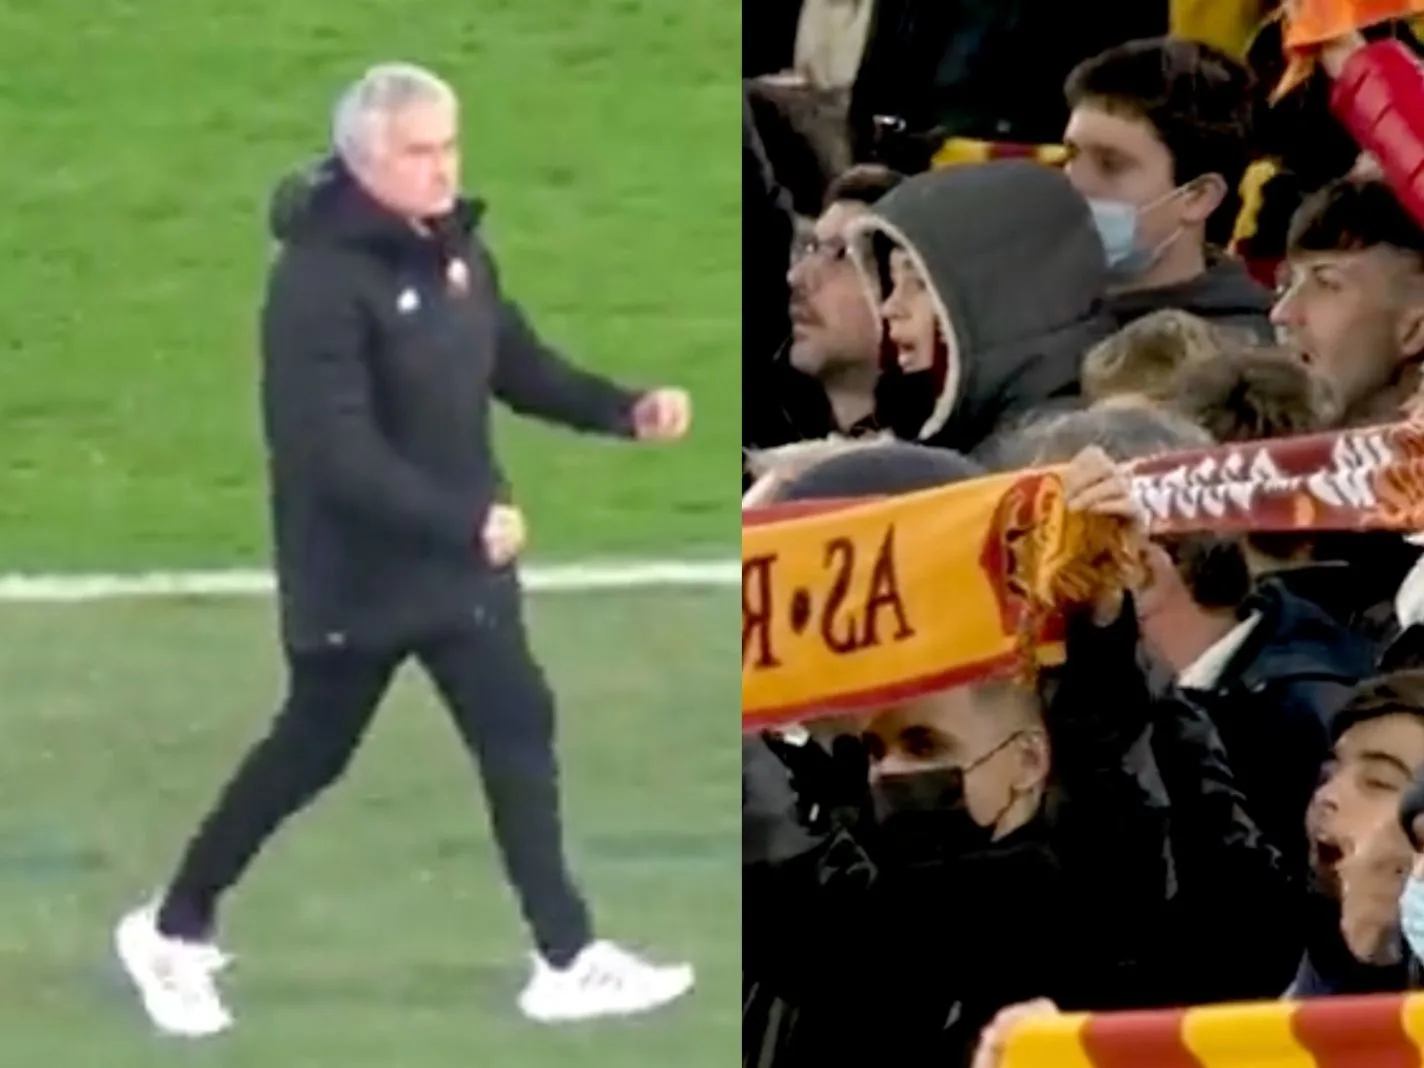 Jose Mourinho and AS Roma fans